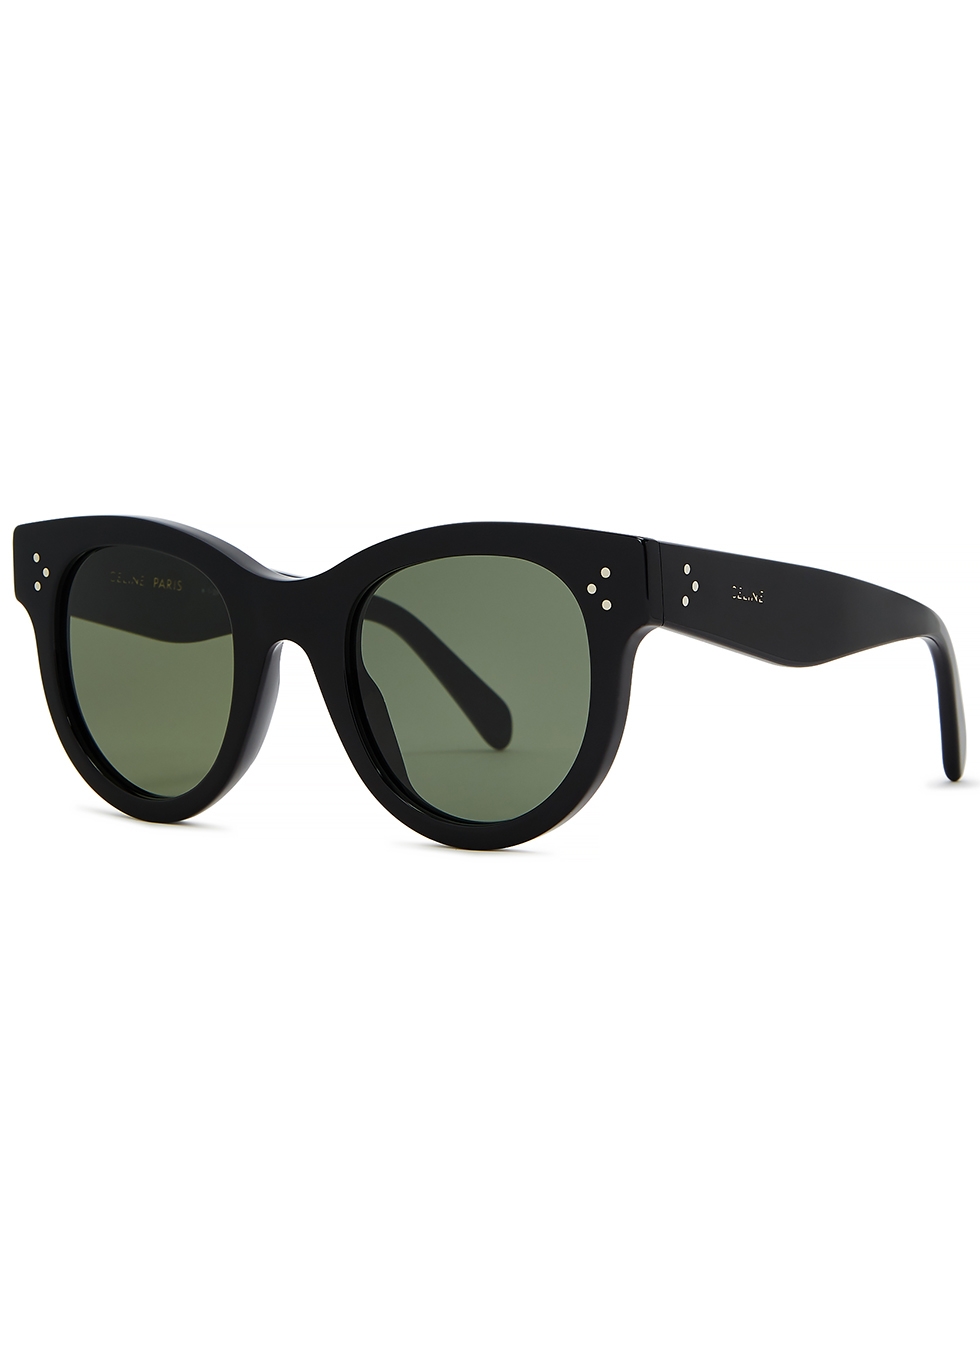 celine black round sunglasses